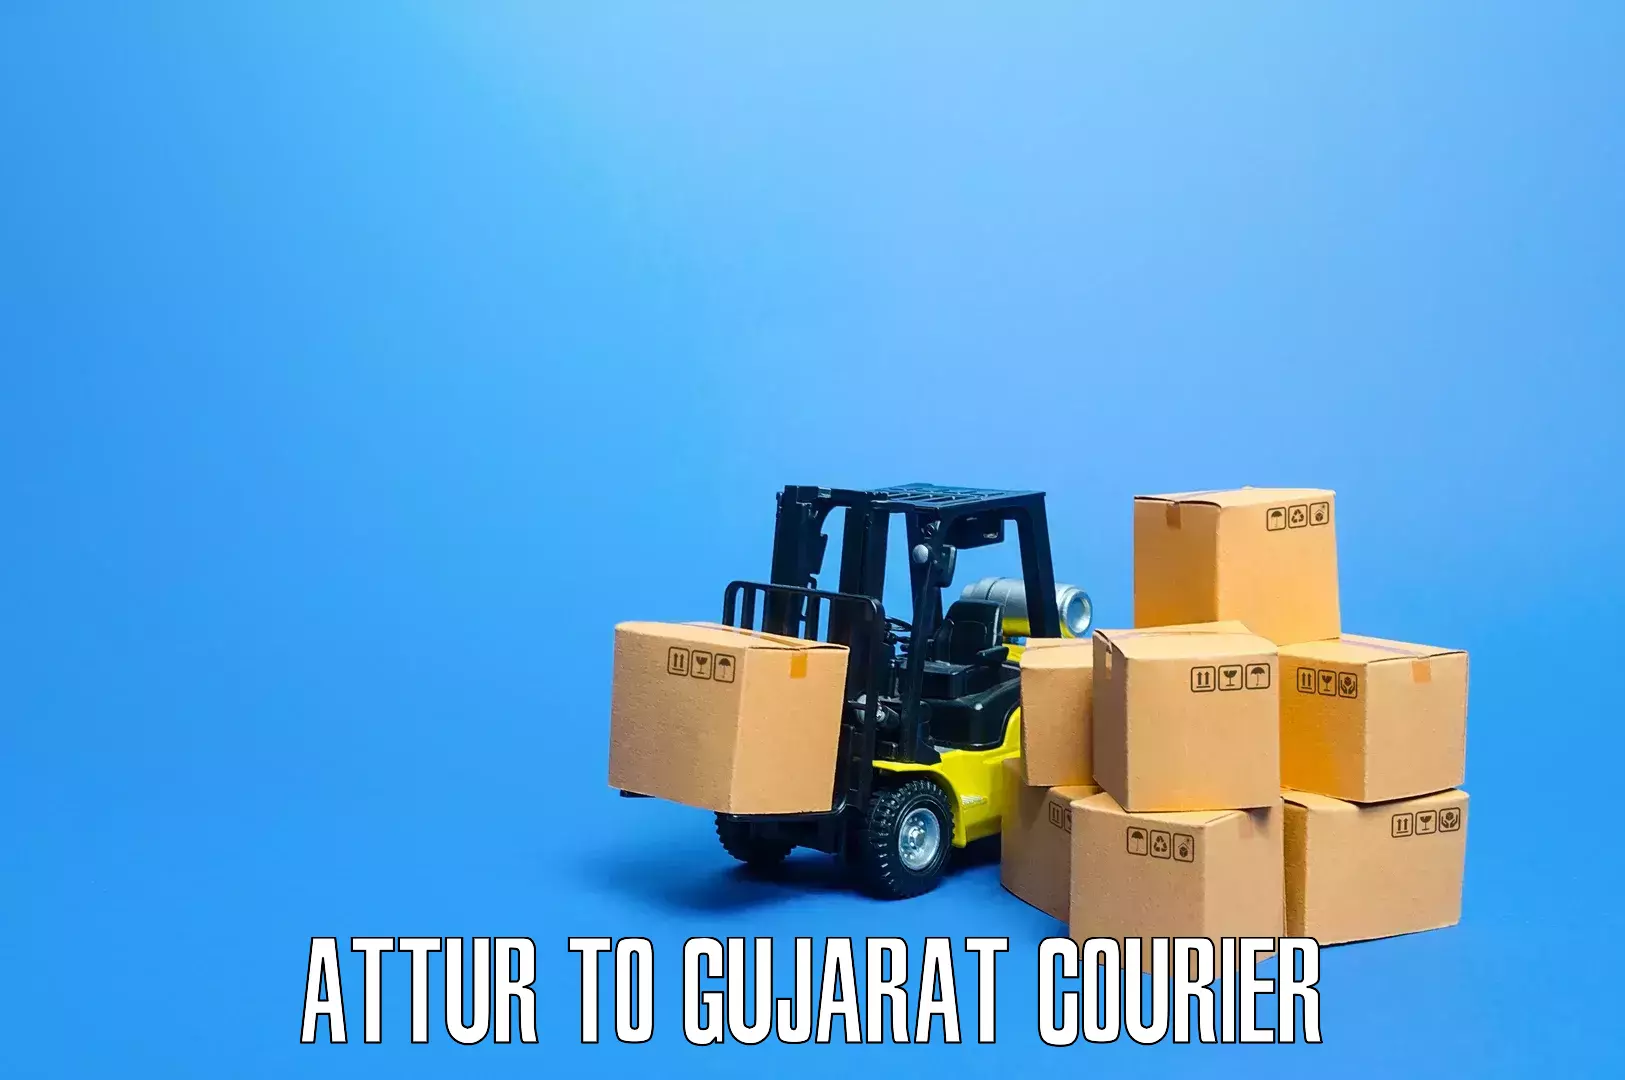 Professional moving company Attur to Surat